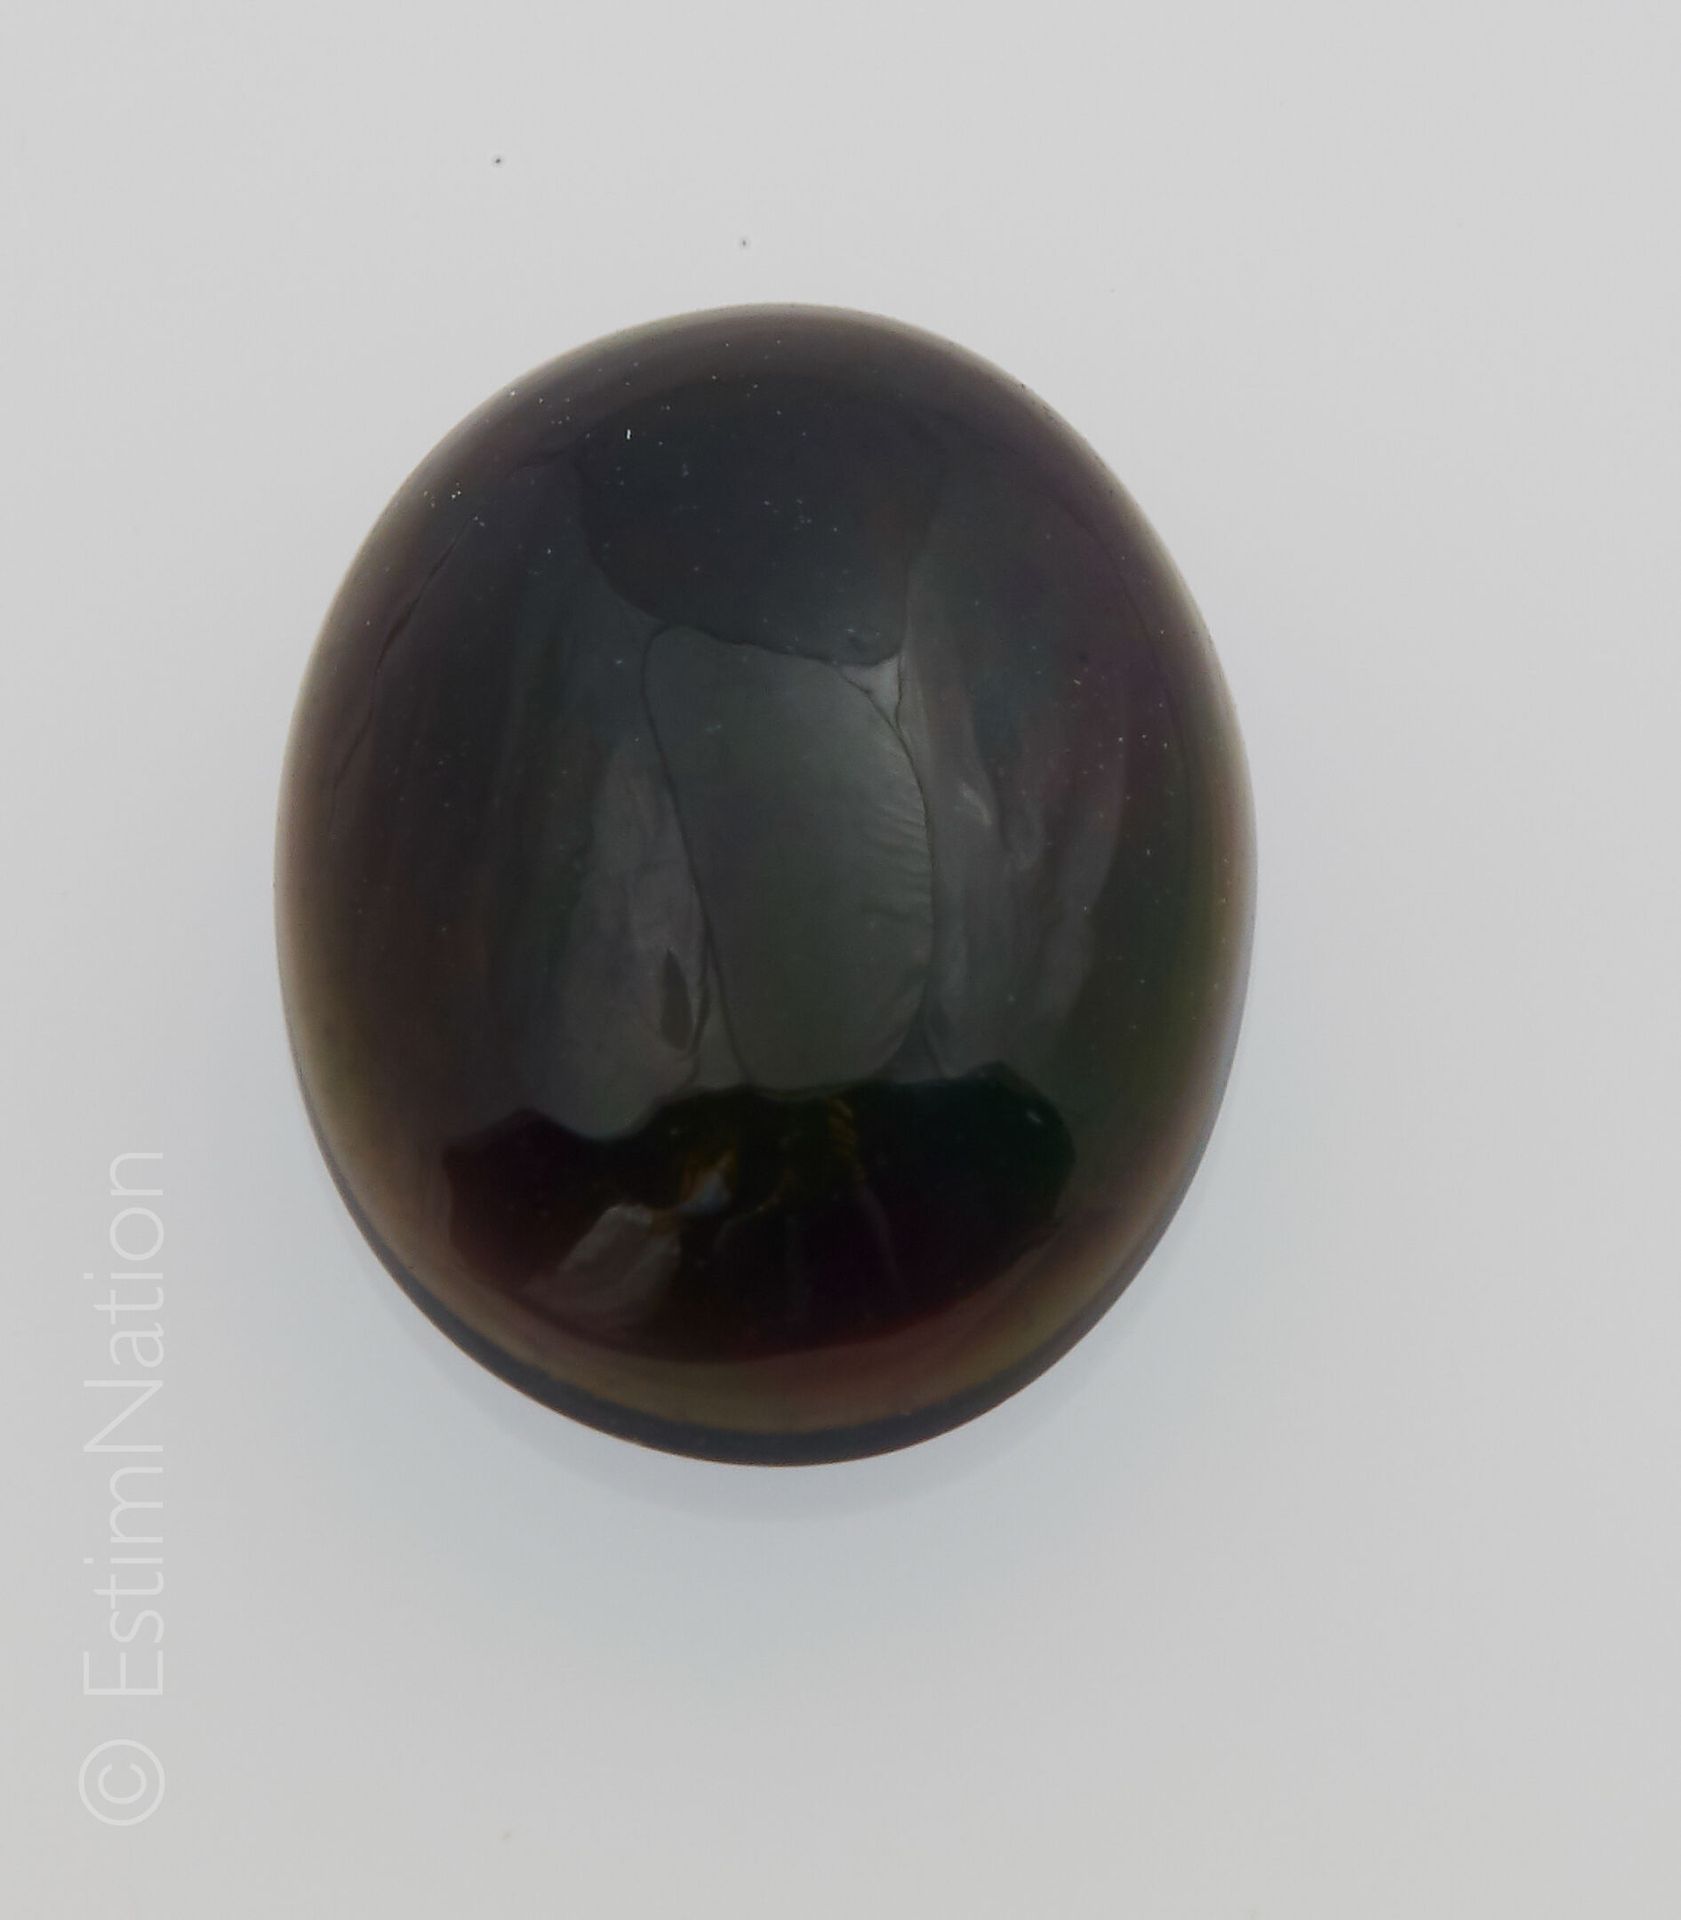 OPALE NOIRE 1.24 CARAT 凸圆形黑蛋白石，重量约为1.24克拉

尺寸：10.21 x 8.25 x 3.30毫米左右。